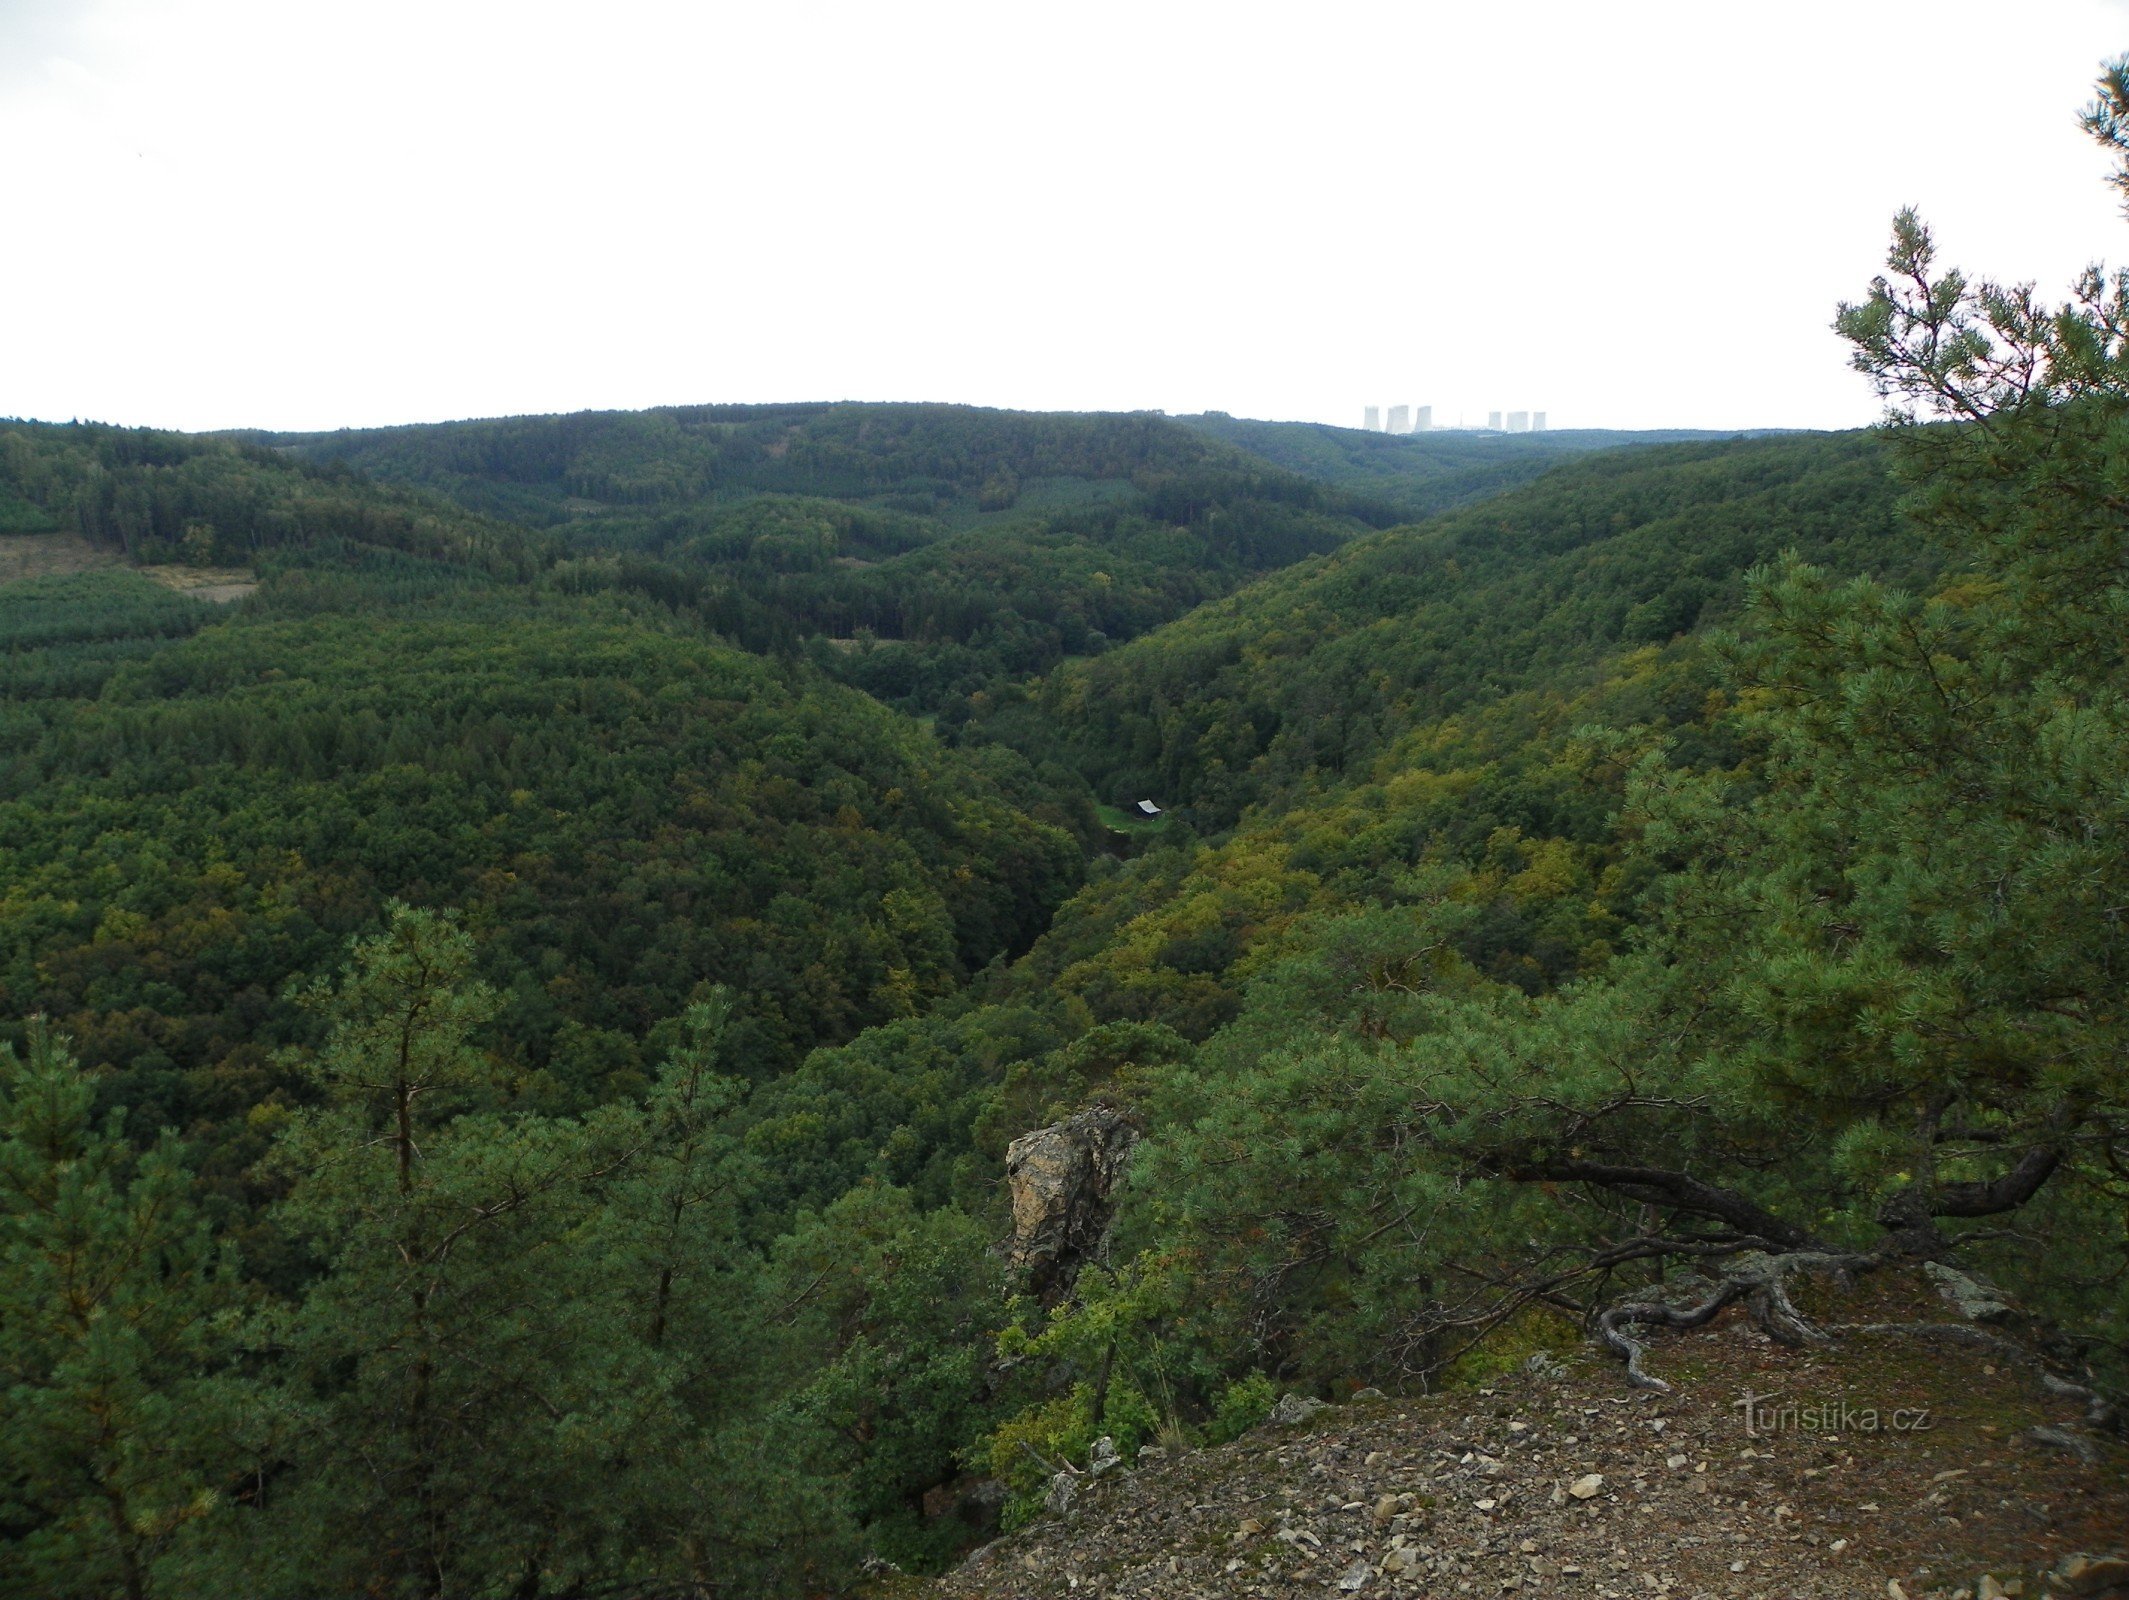 The valley of Jihlava pod Mohelno